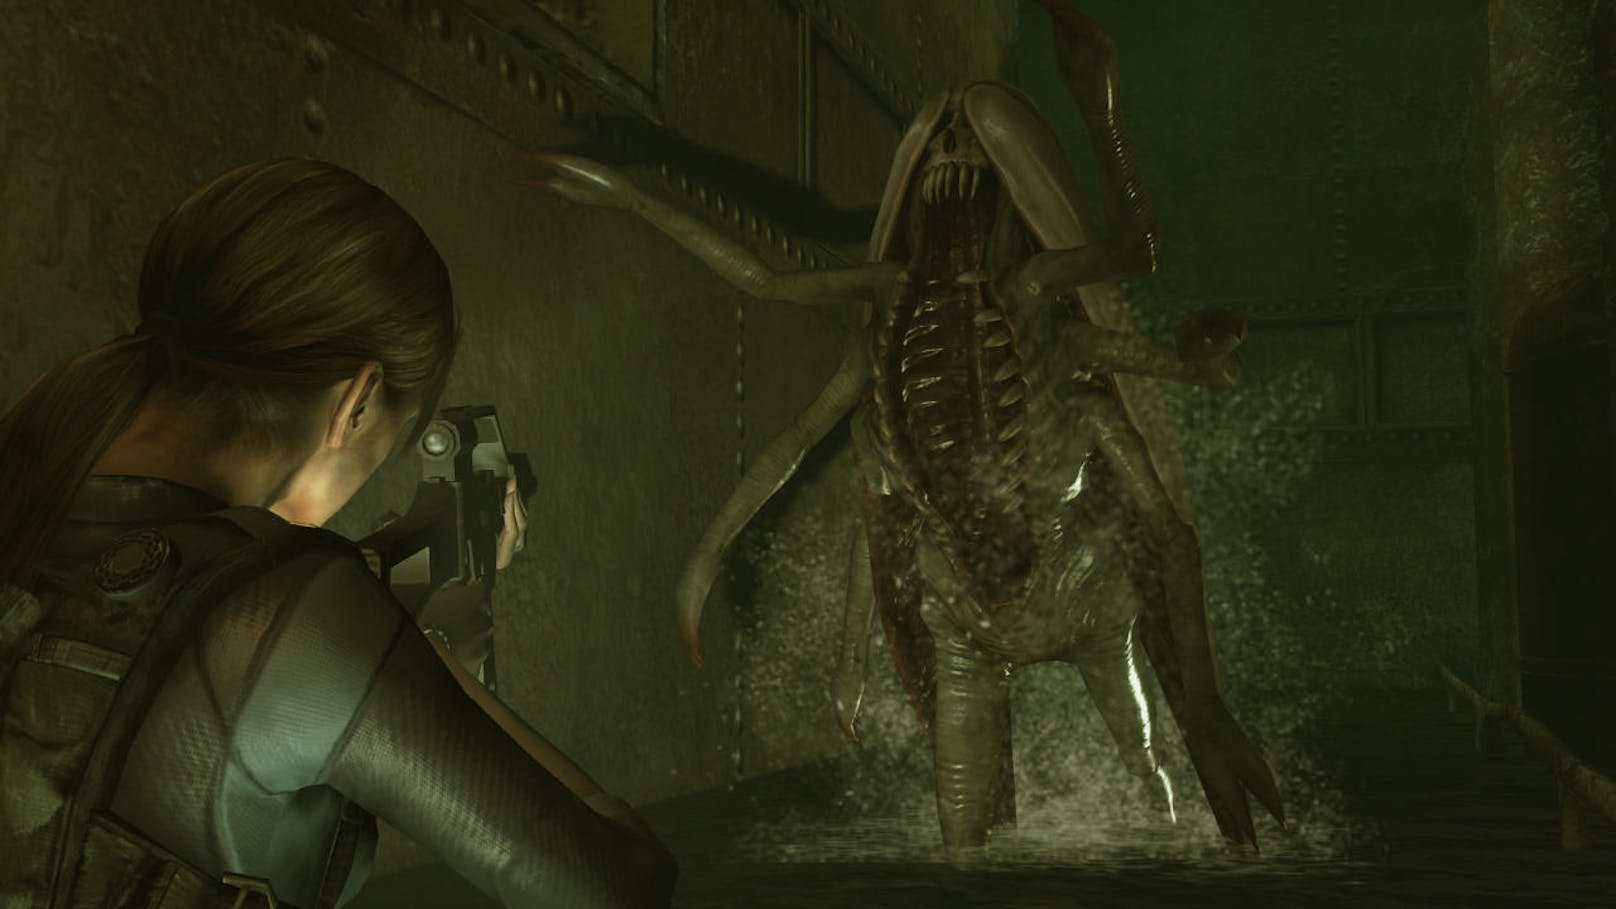  <a href="https://www.heute.at/digital/games/story/Resident-Evil-Revelations-im-Test--Fluessiger-Horror-53355380" target="_blank">Resident Evil: Revelations</a>